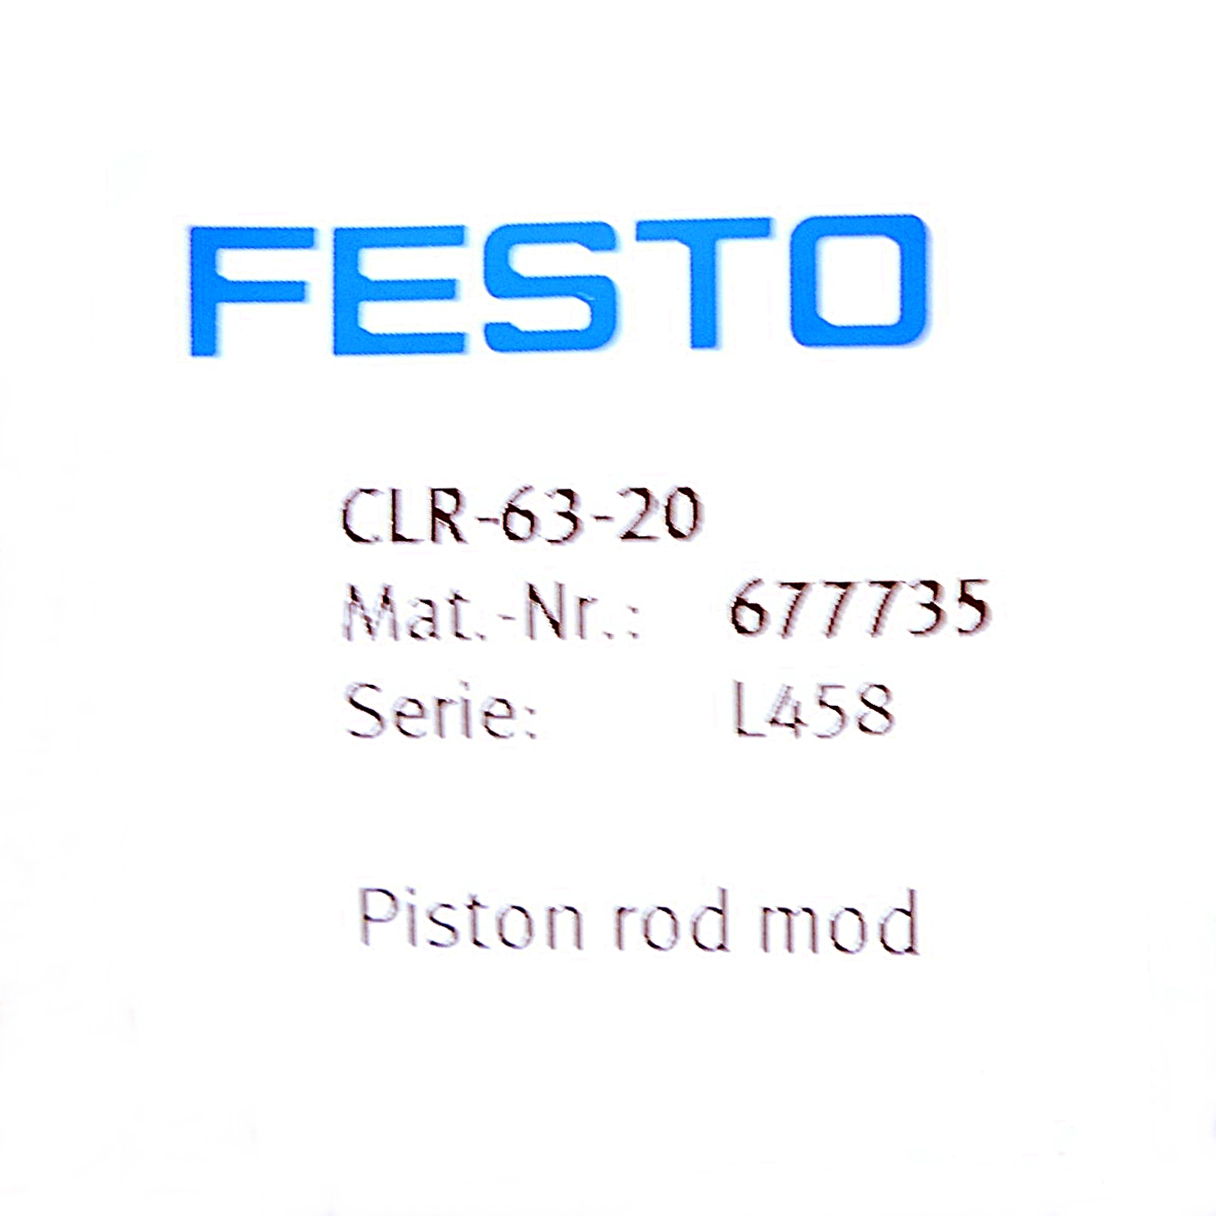 Piston rod mod. CLR-63-20 